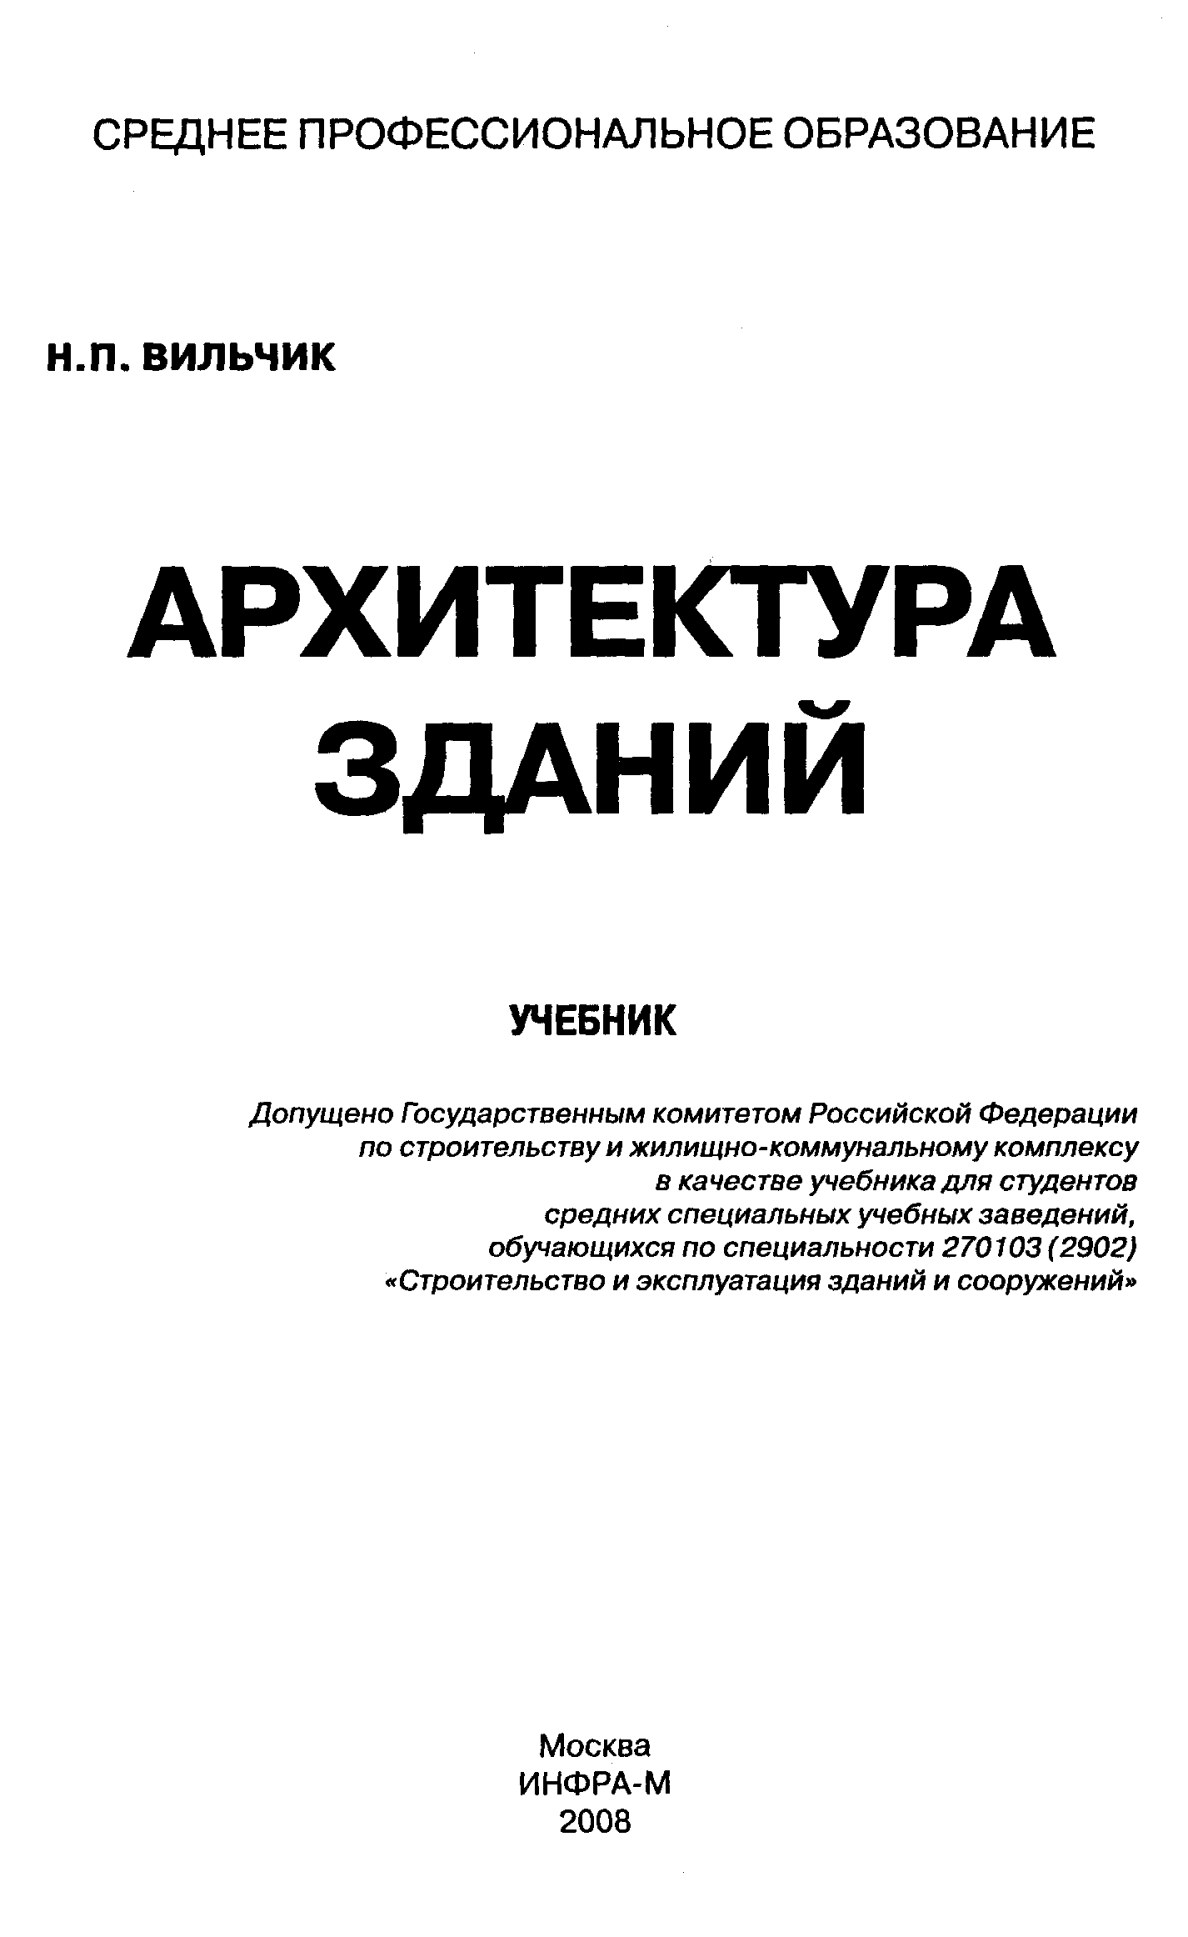 Архитектура зданий : Учебник / Н. П. Вильчик. — Москва : ИНФРА-М, 2008